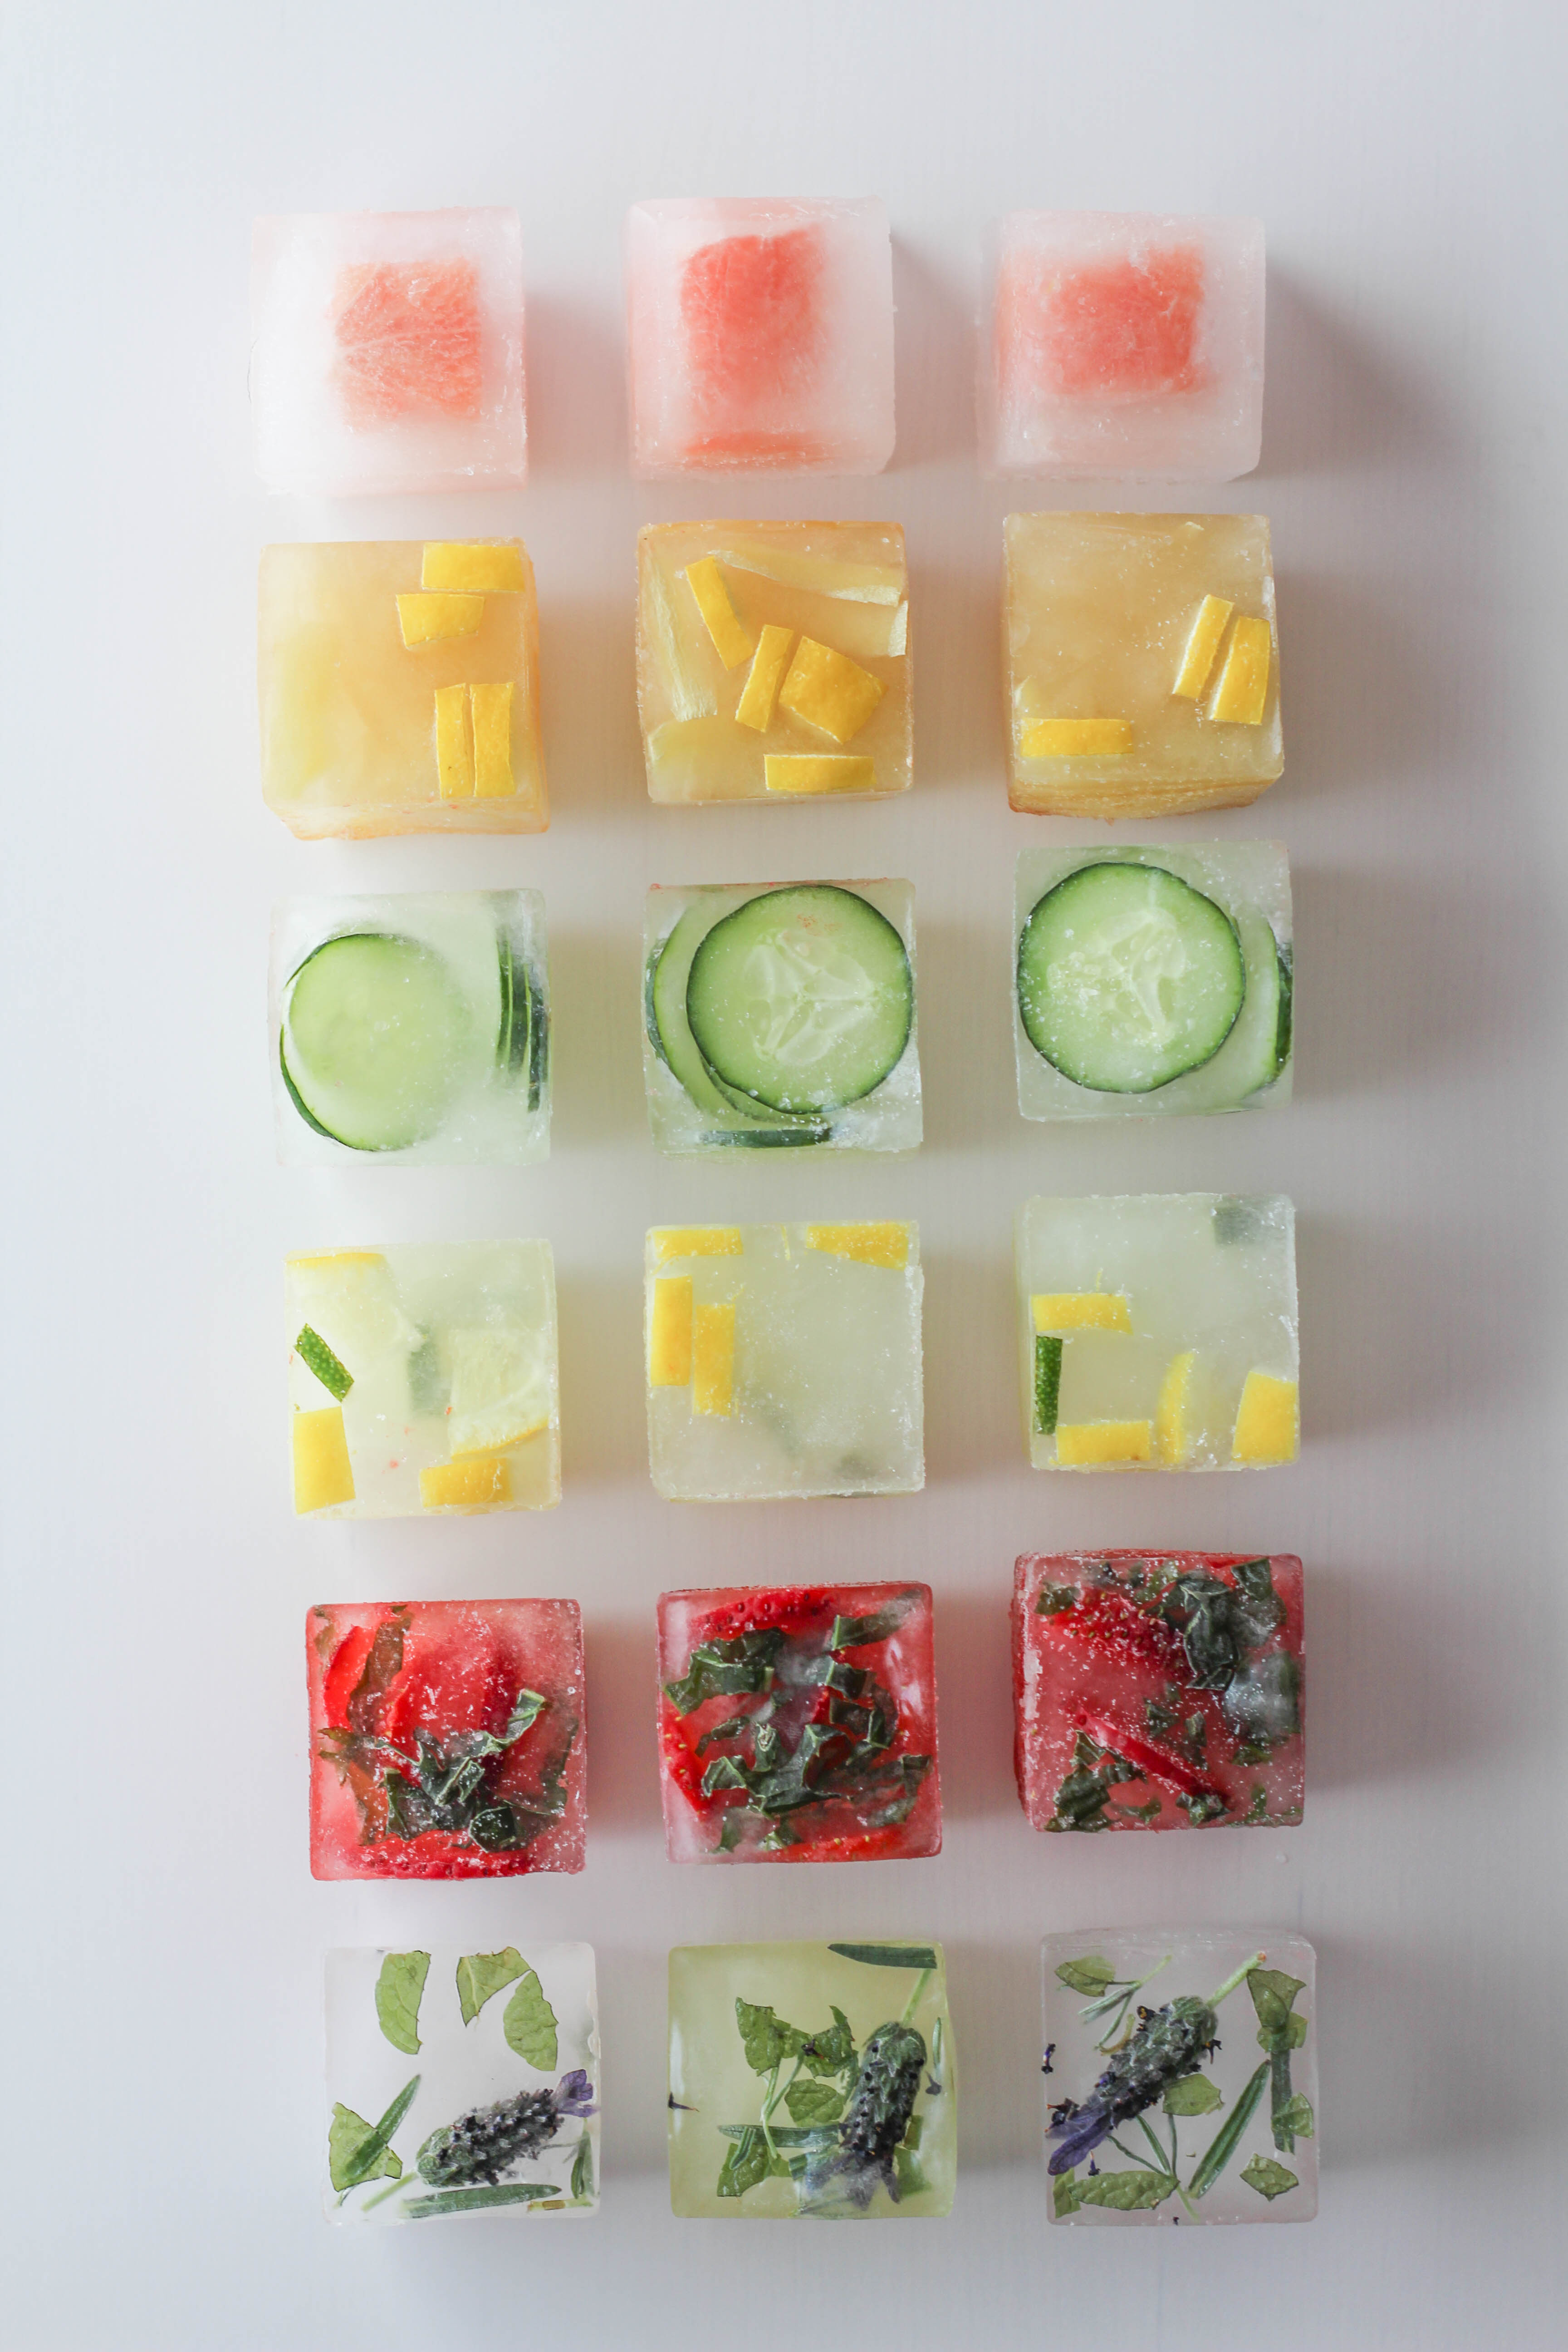 http://www.letsmingleblog.com/wp-content/uploads/2015/04/Flavored-Ice-Cubes-10.jpg